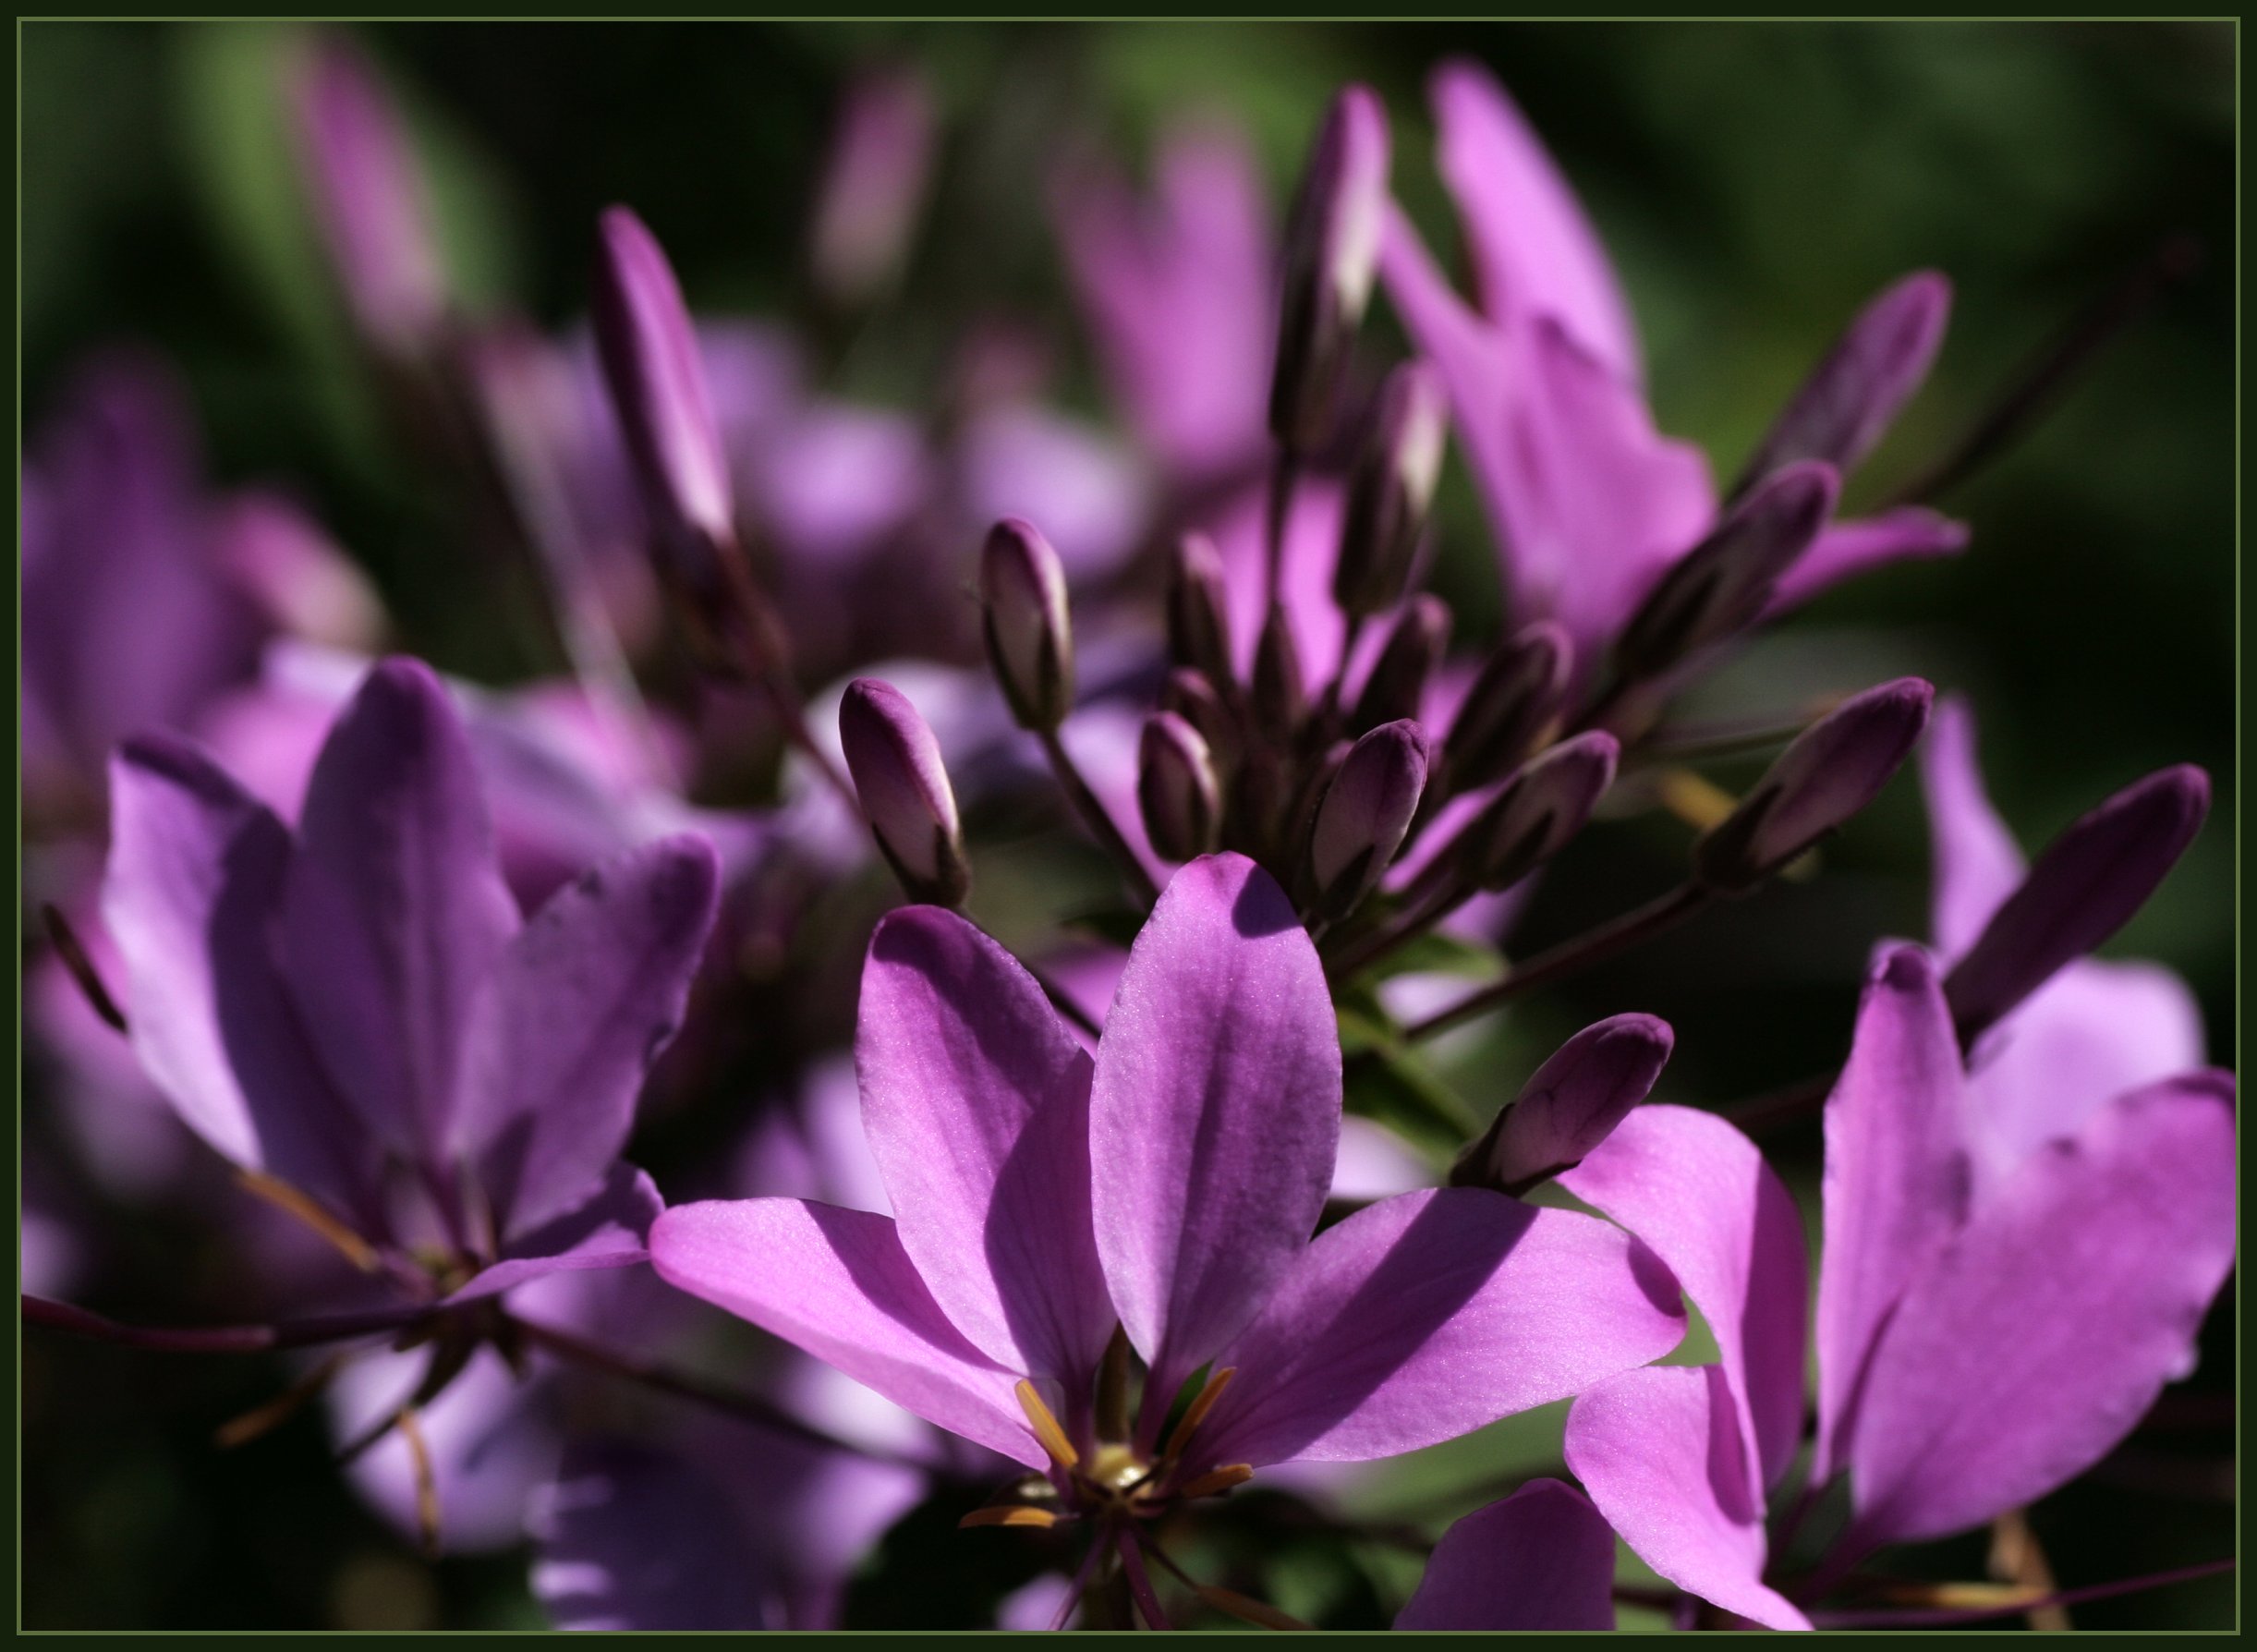 purple flowers in bloom